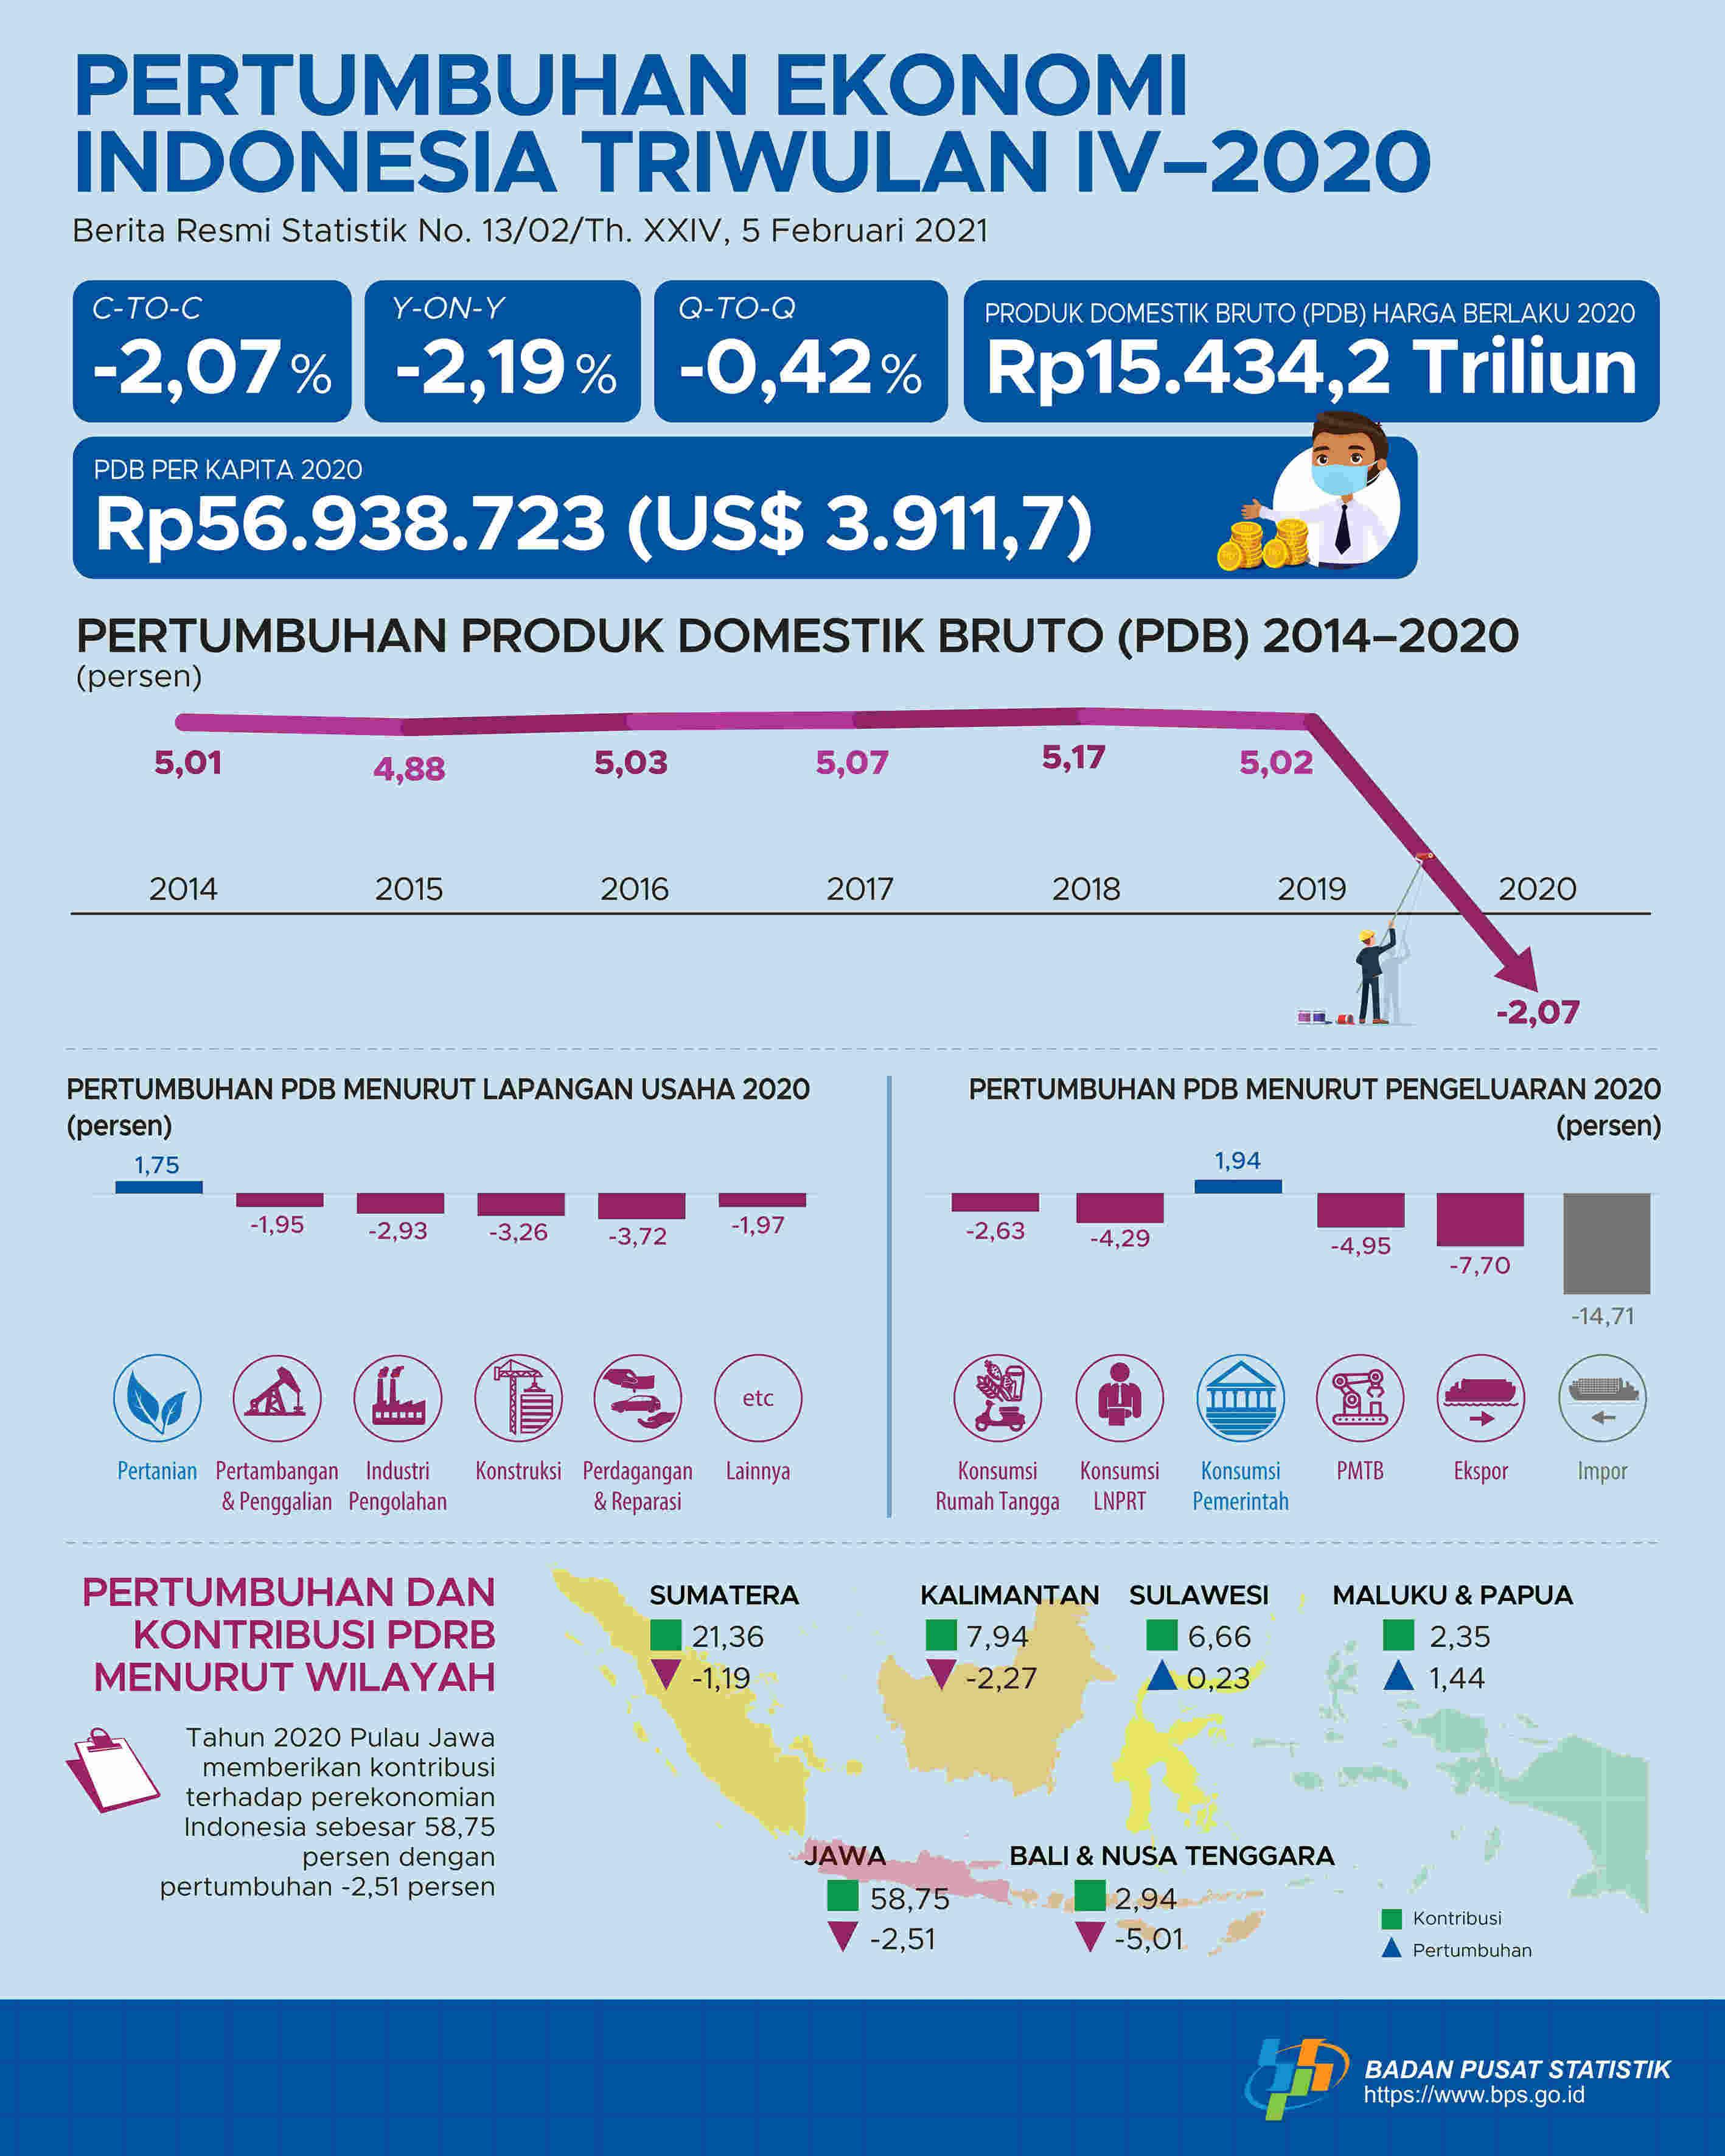 Economic Growth of Indonesia descend 2.07 percent (c-to-c)